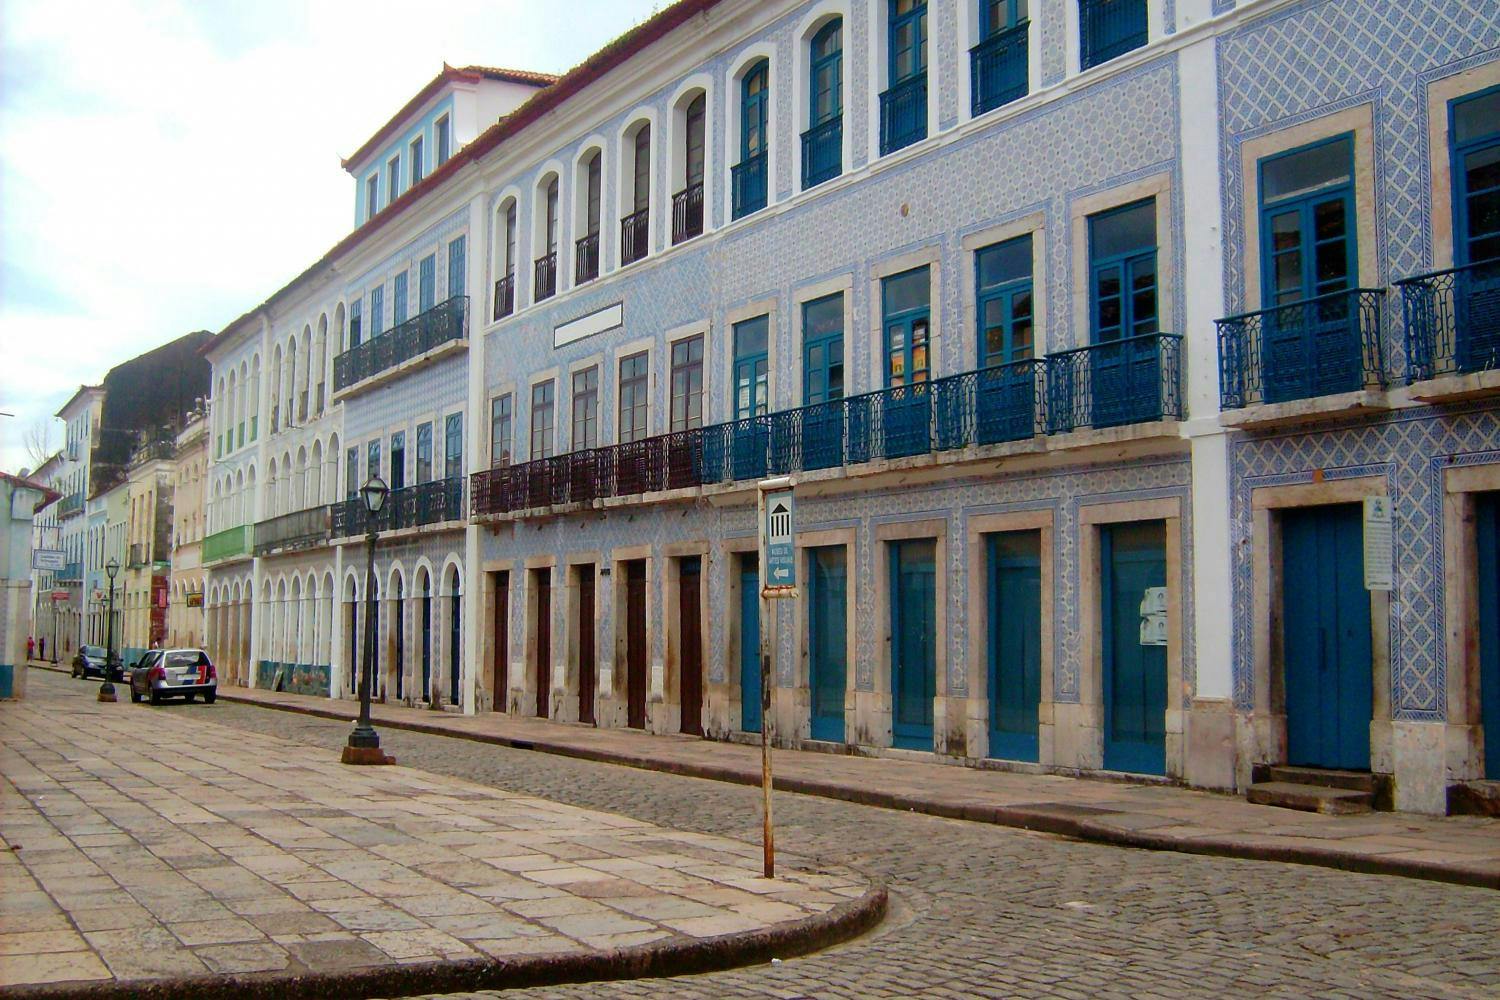 Portugal street Sao Luis Brazil.jpg